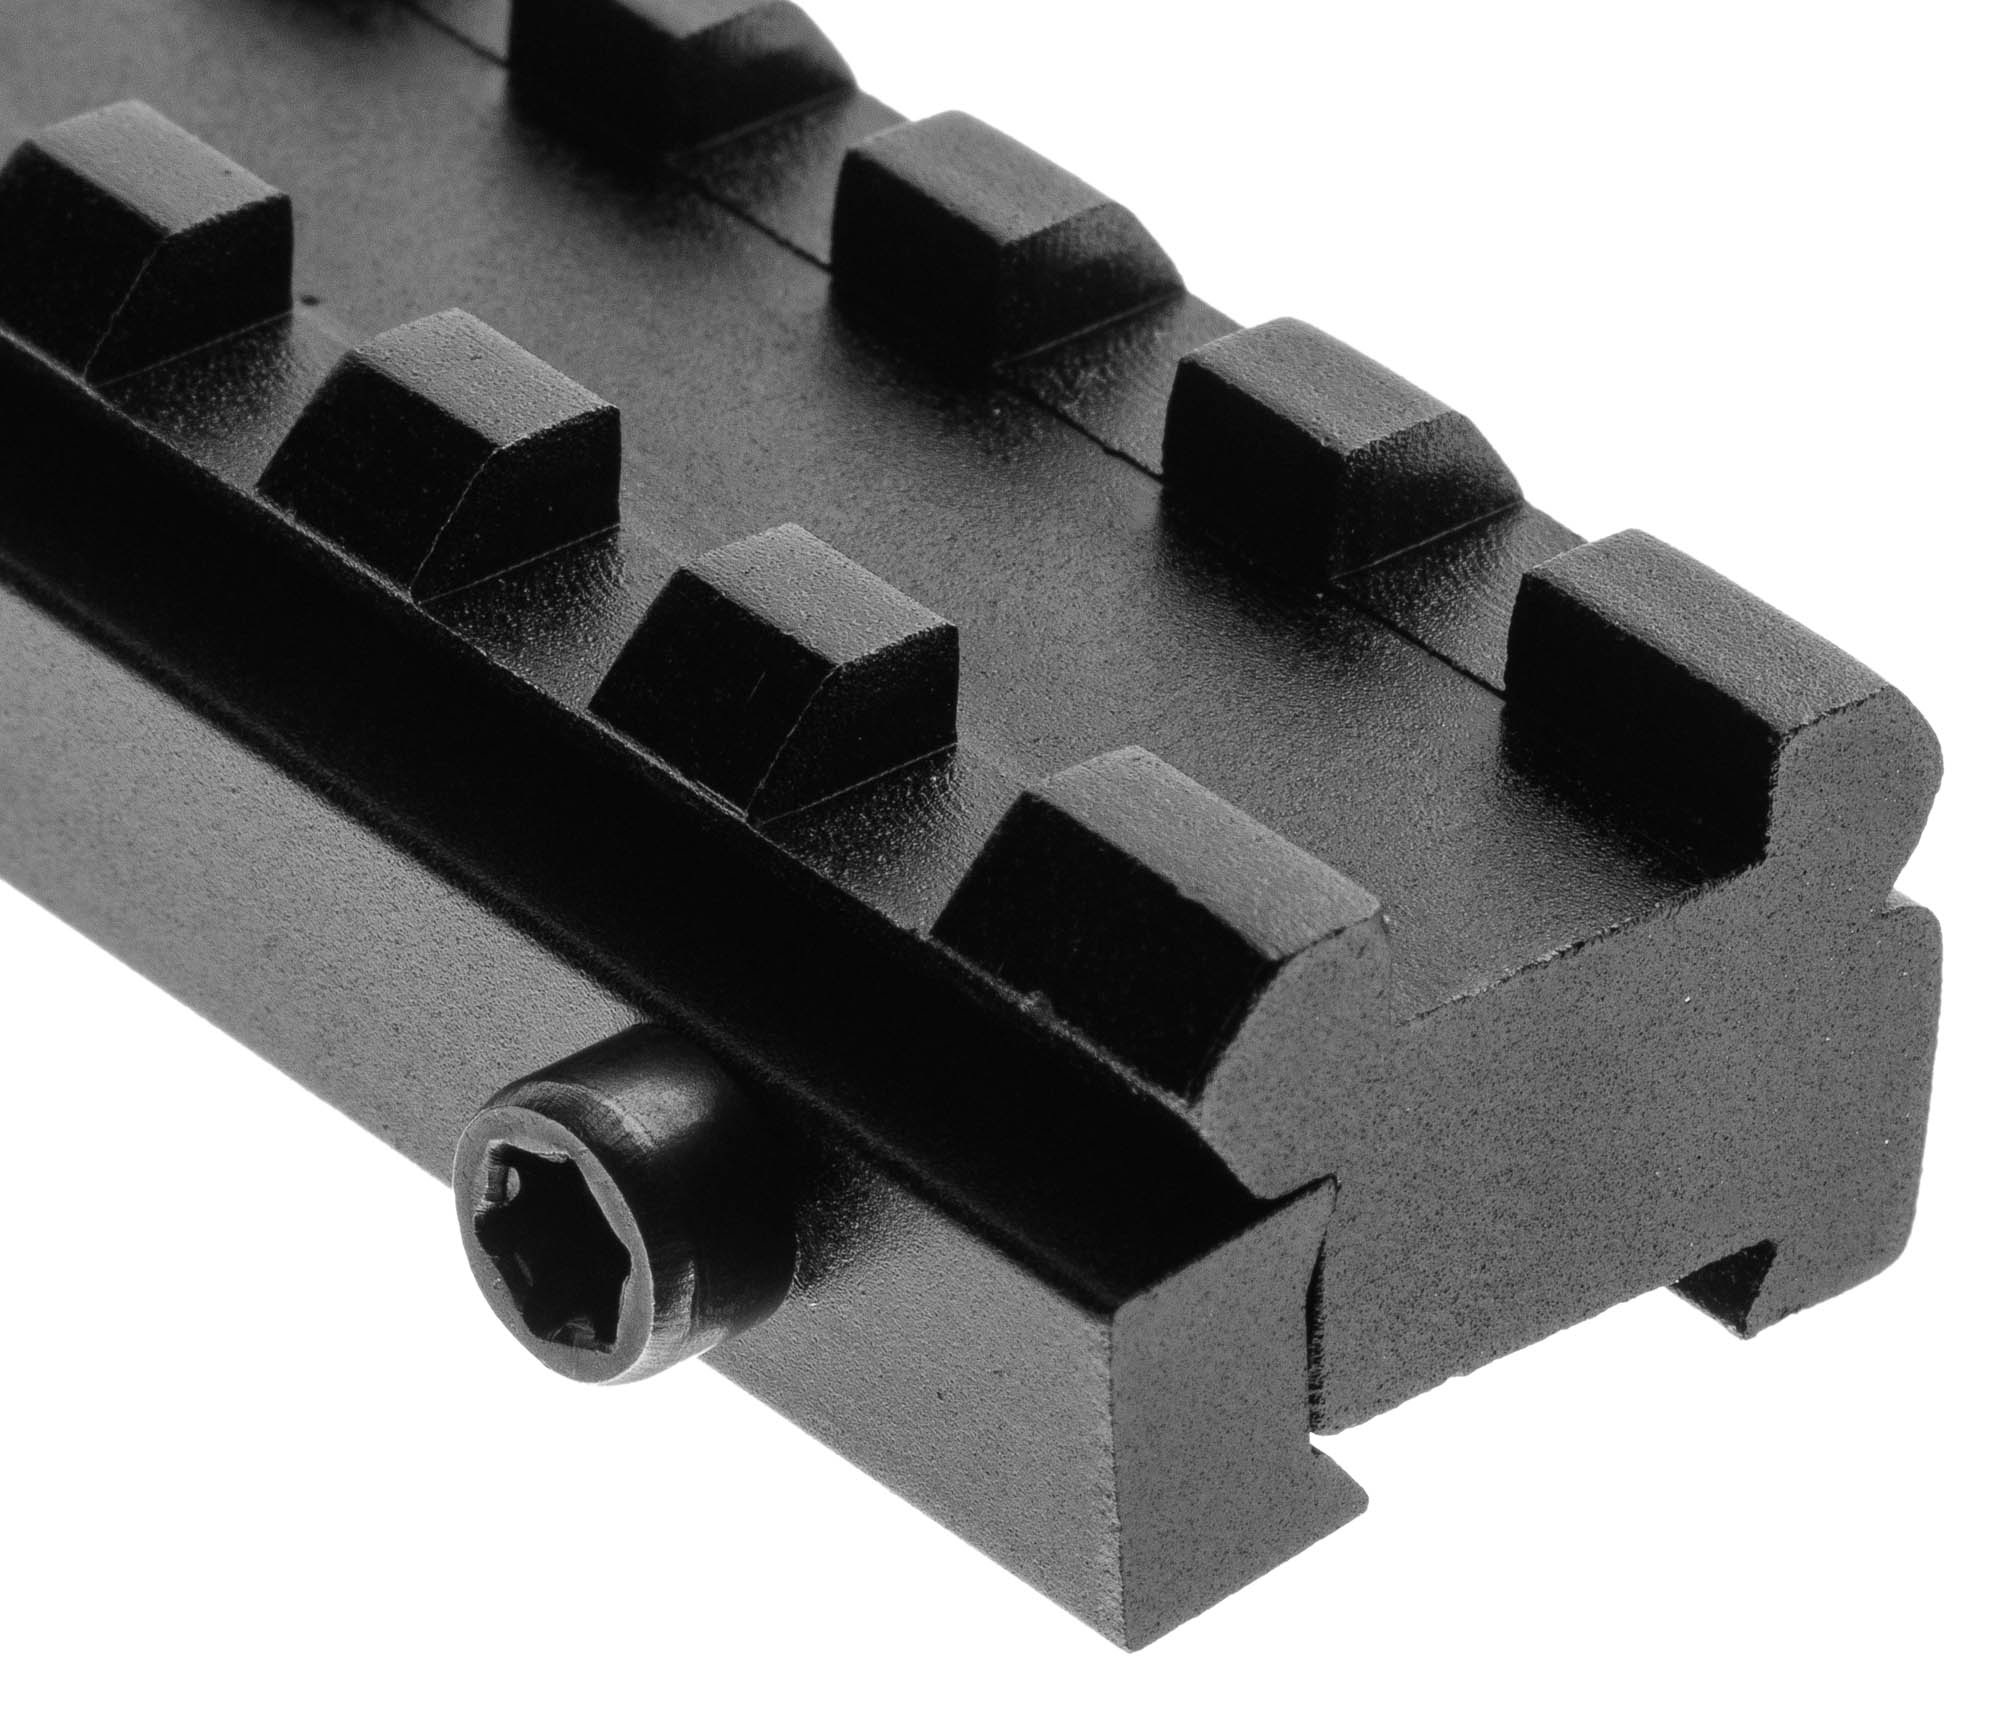 Rail Adaptateur 11 mm vers 21 mm pour Rail Picatinny